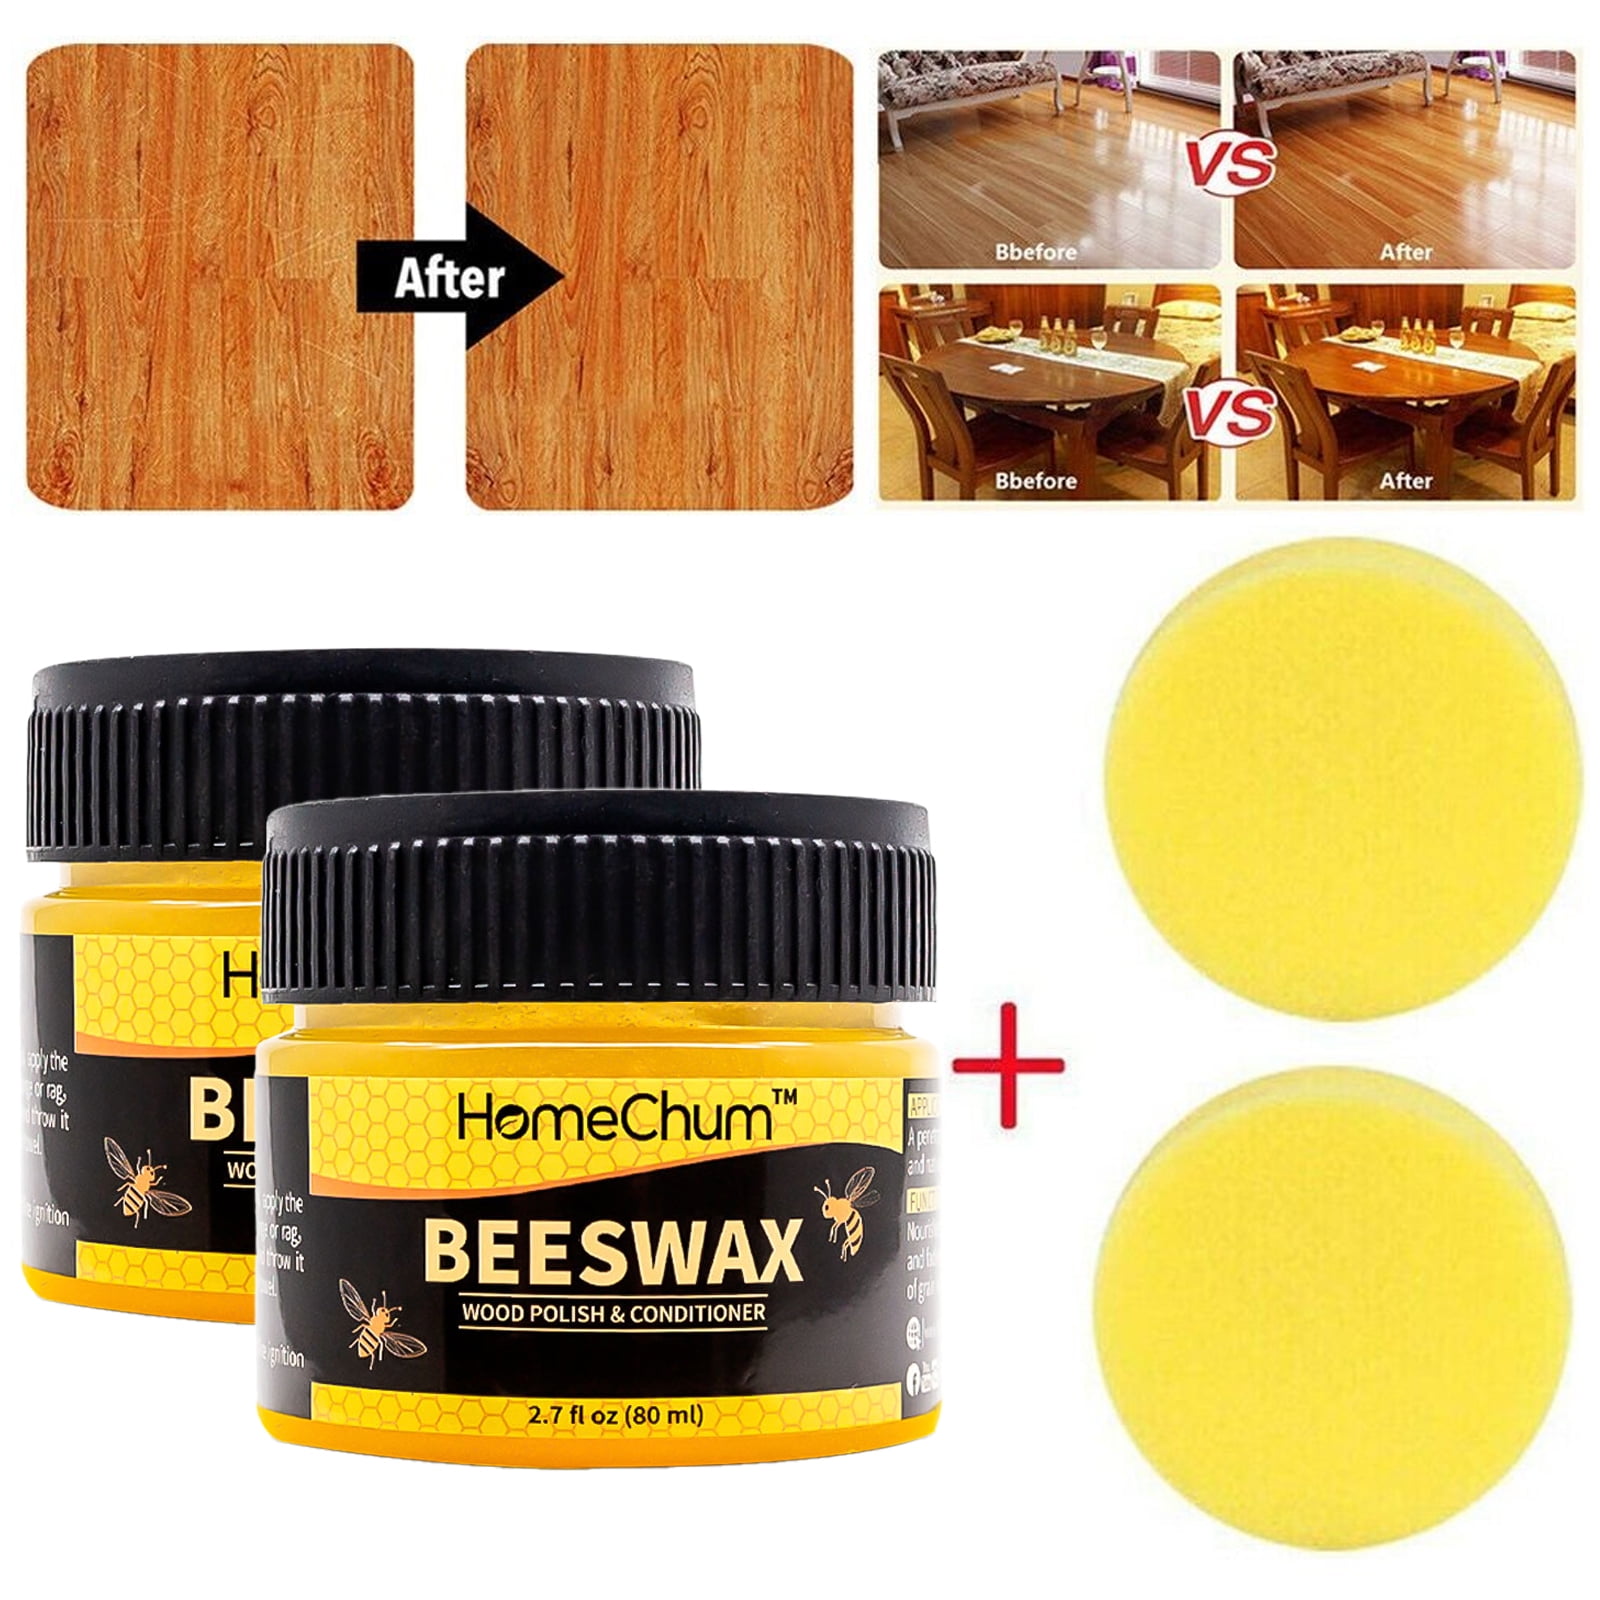 5 Good Reasons to Use Beeswax Wood Polish – Collombatti Naturals